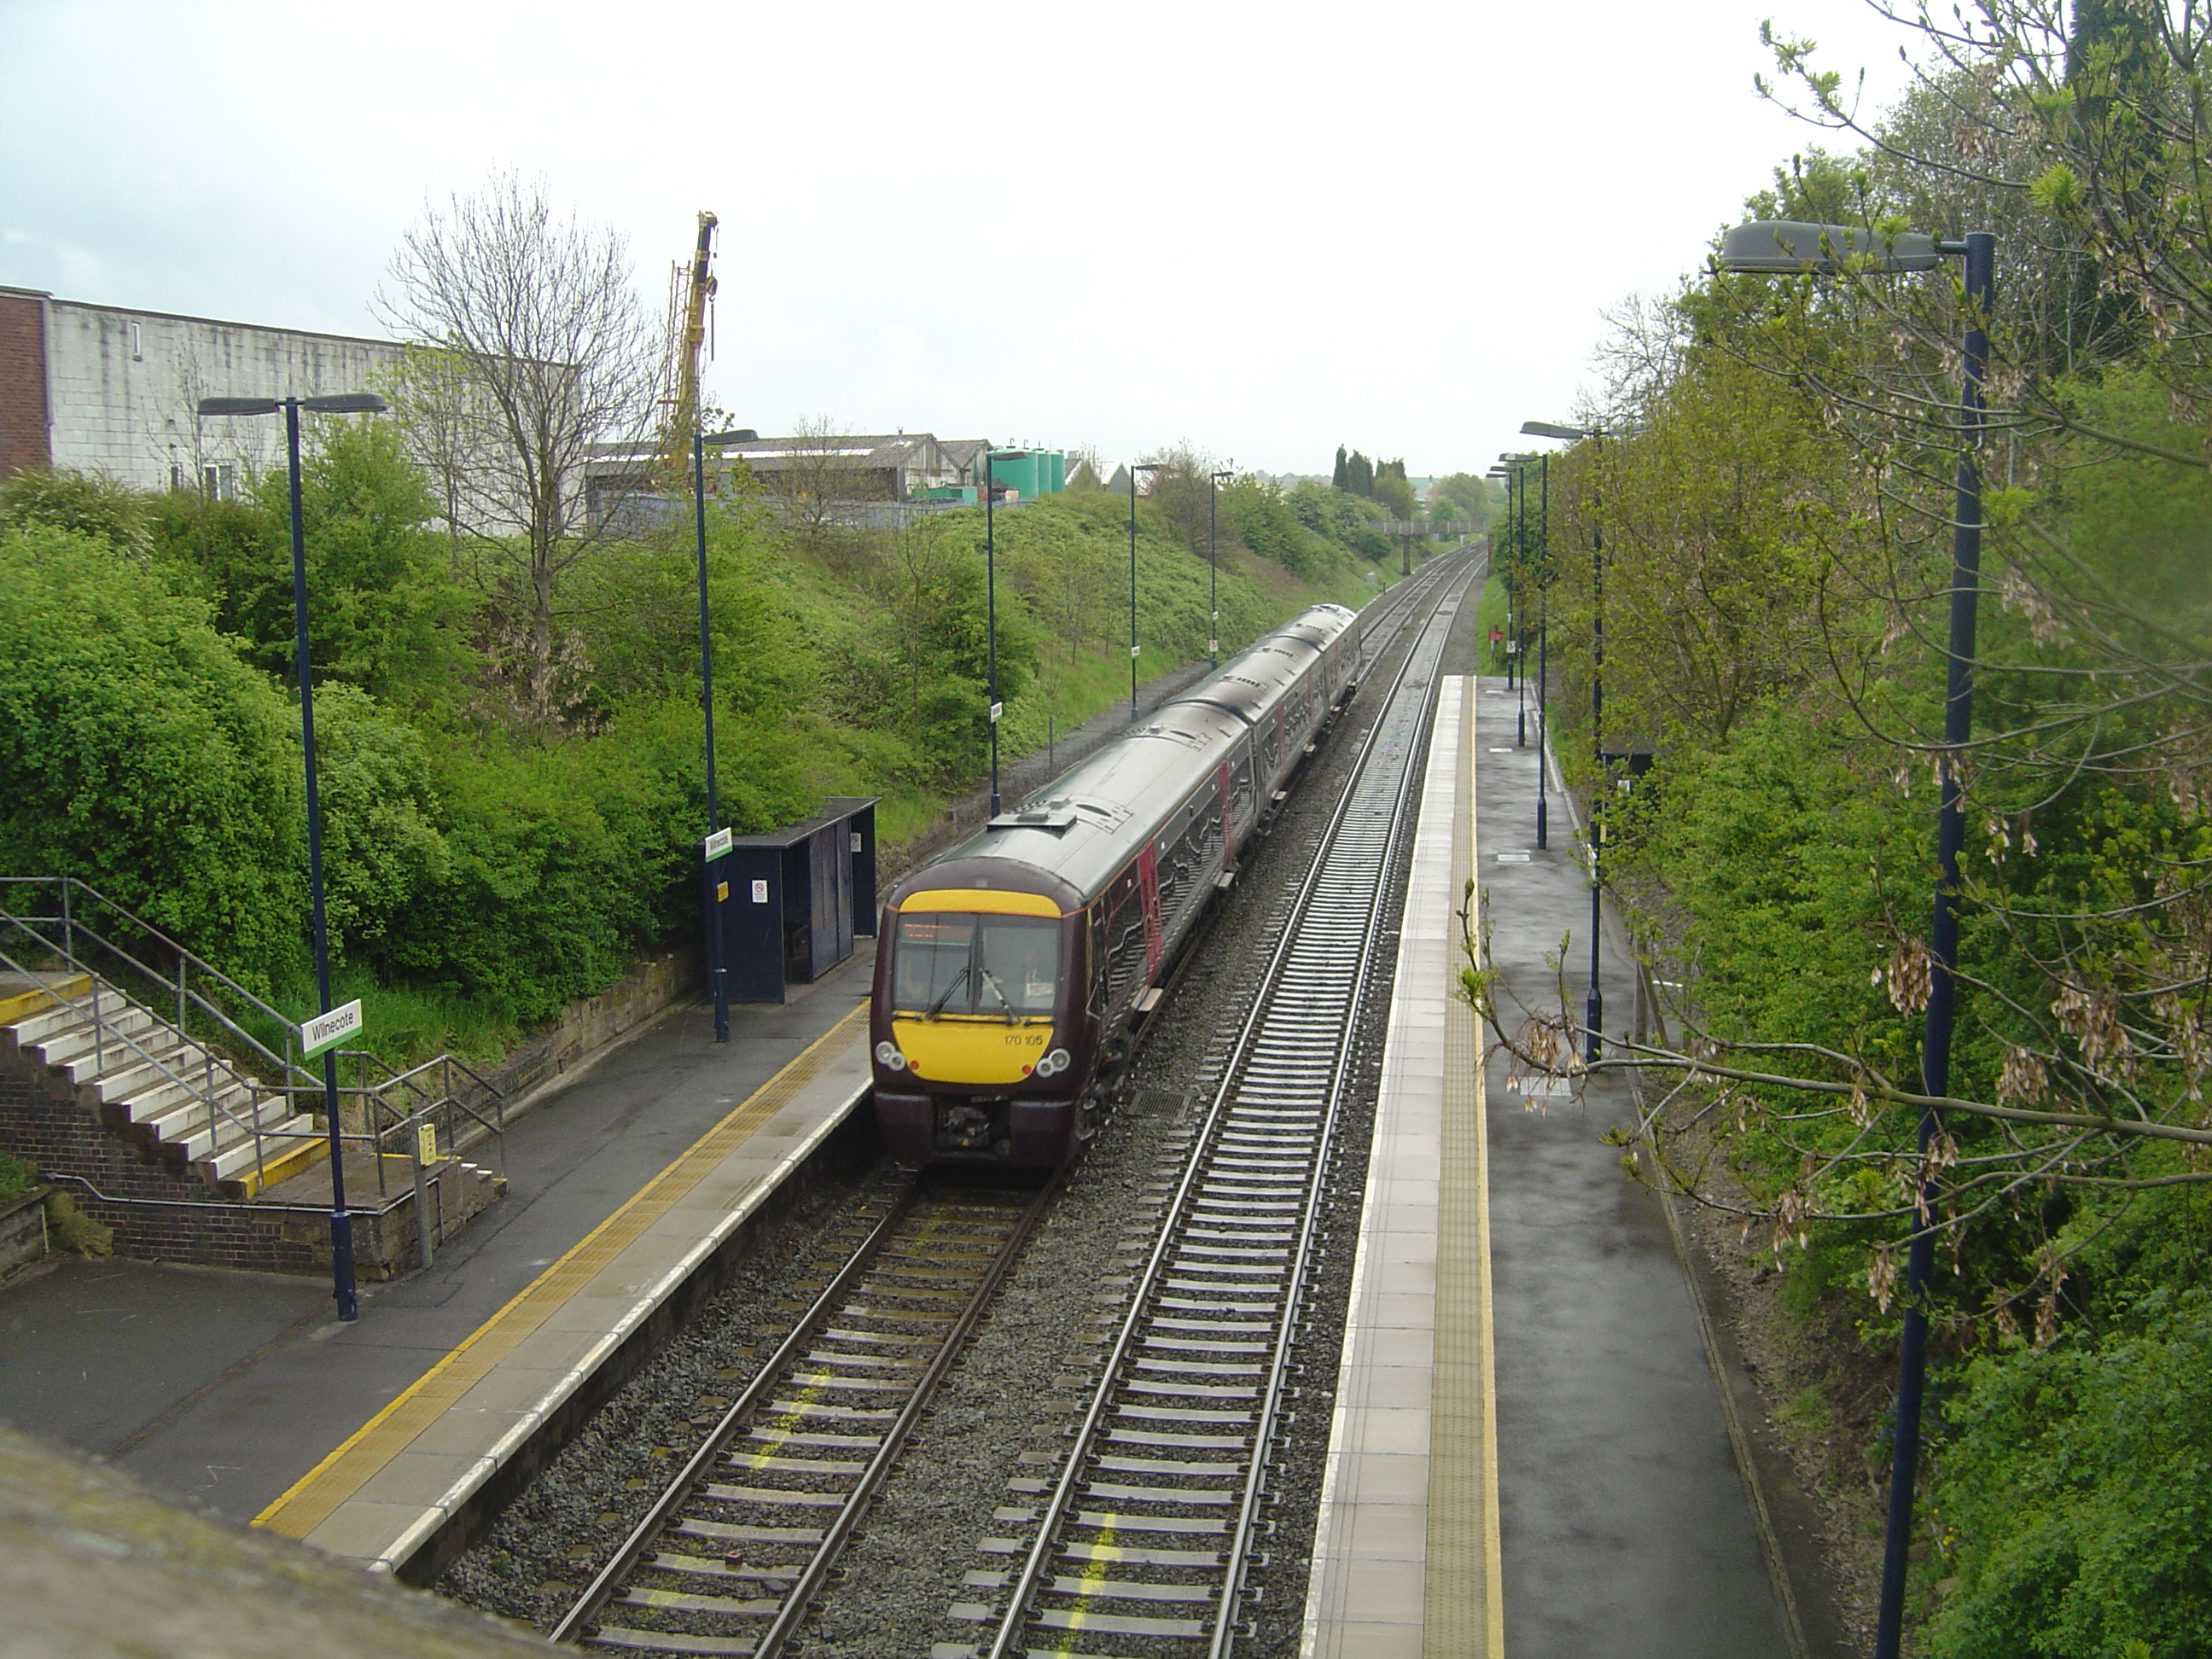 Wilnecote railway station